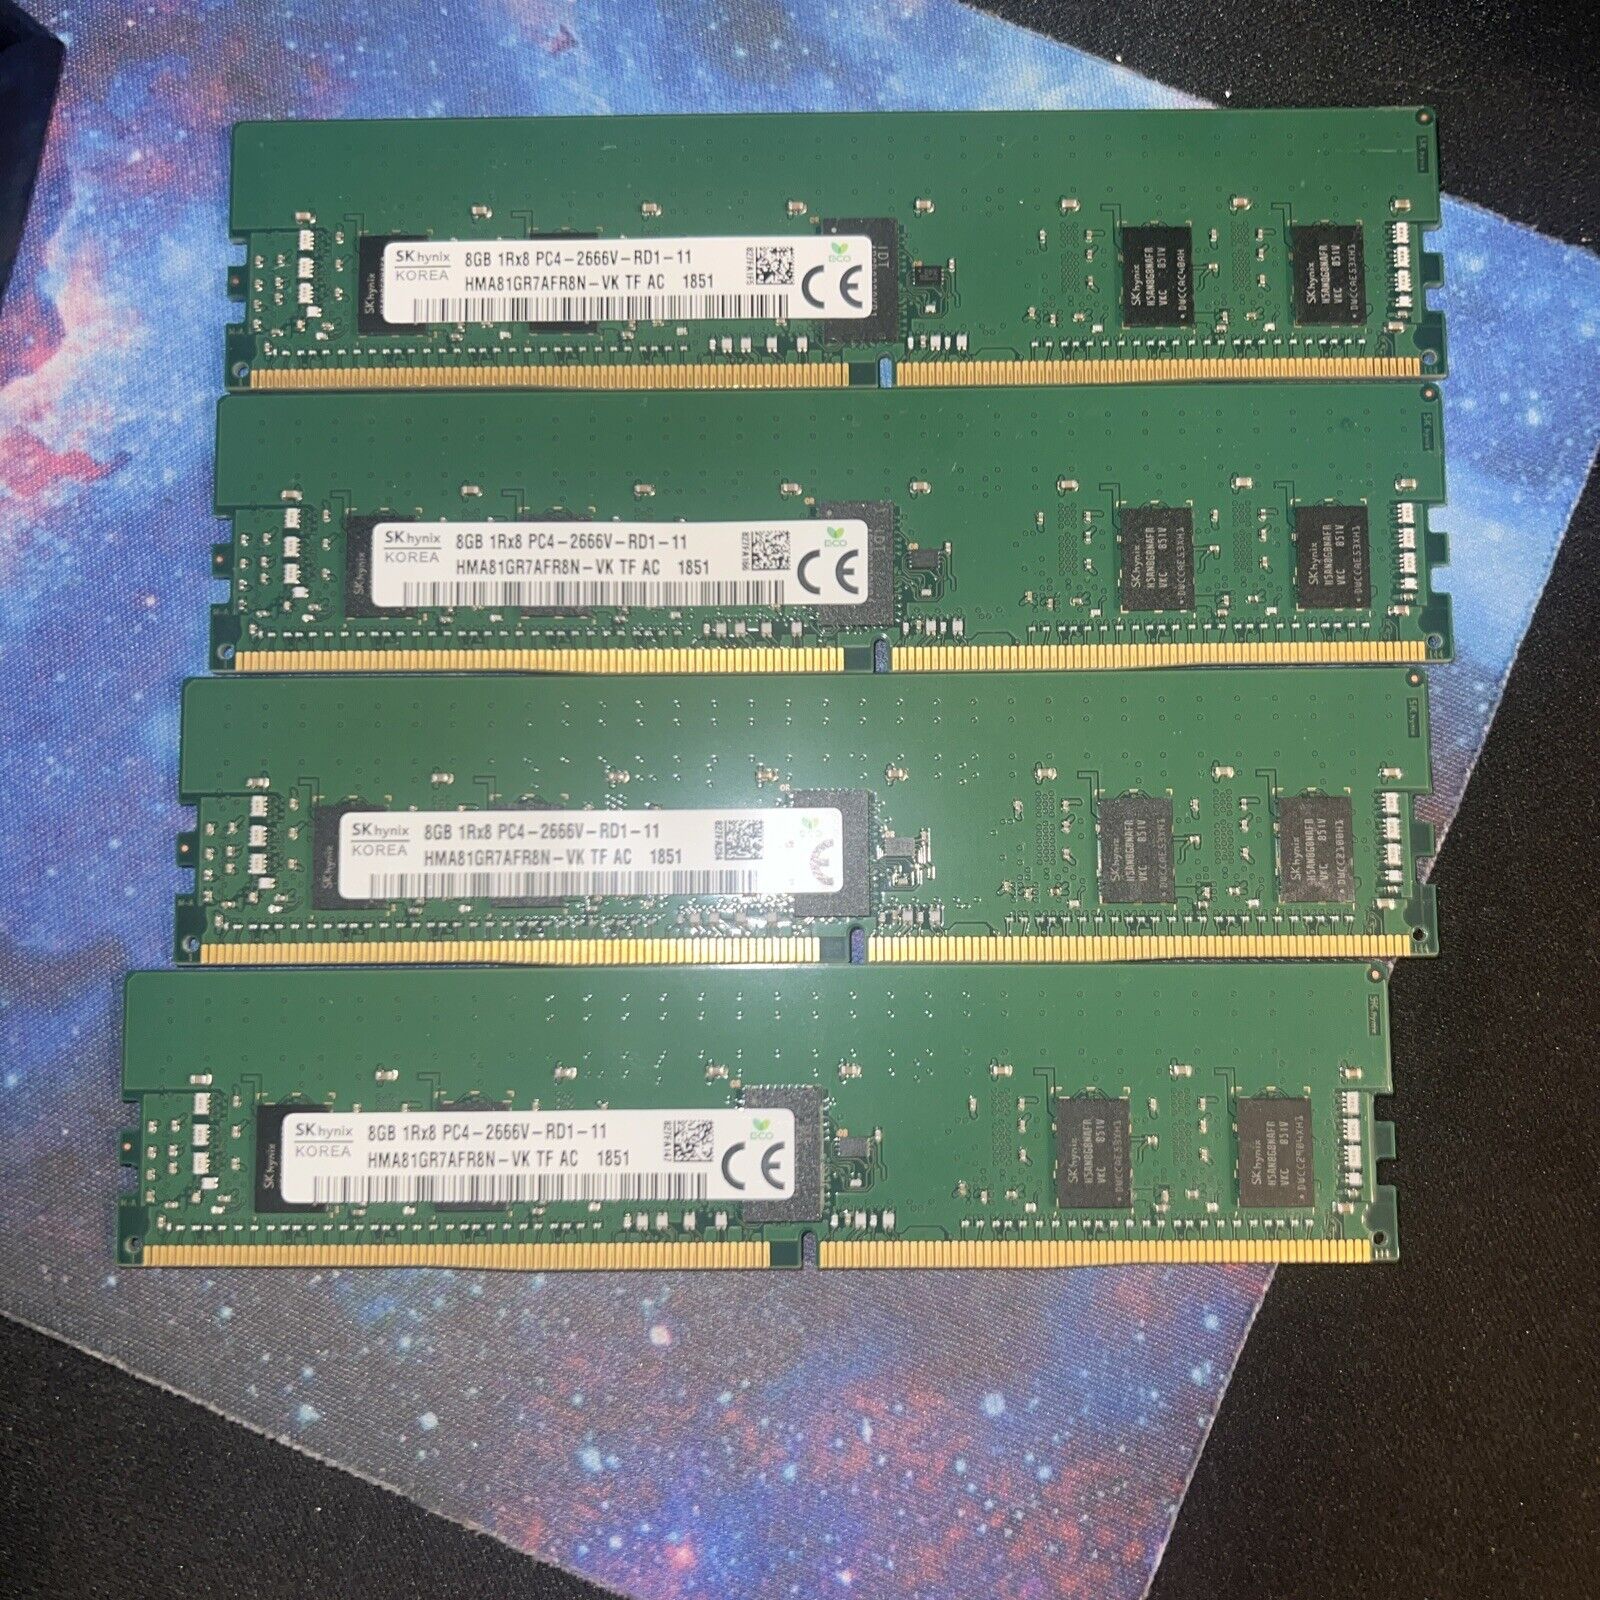 Genuine HP 8GB 2933MHz DDR4 PC4-2666V-RD1-11